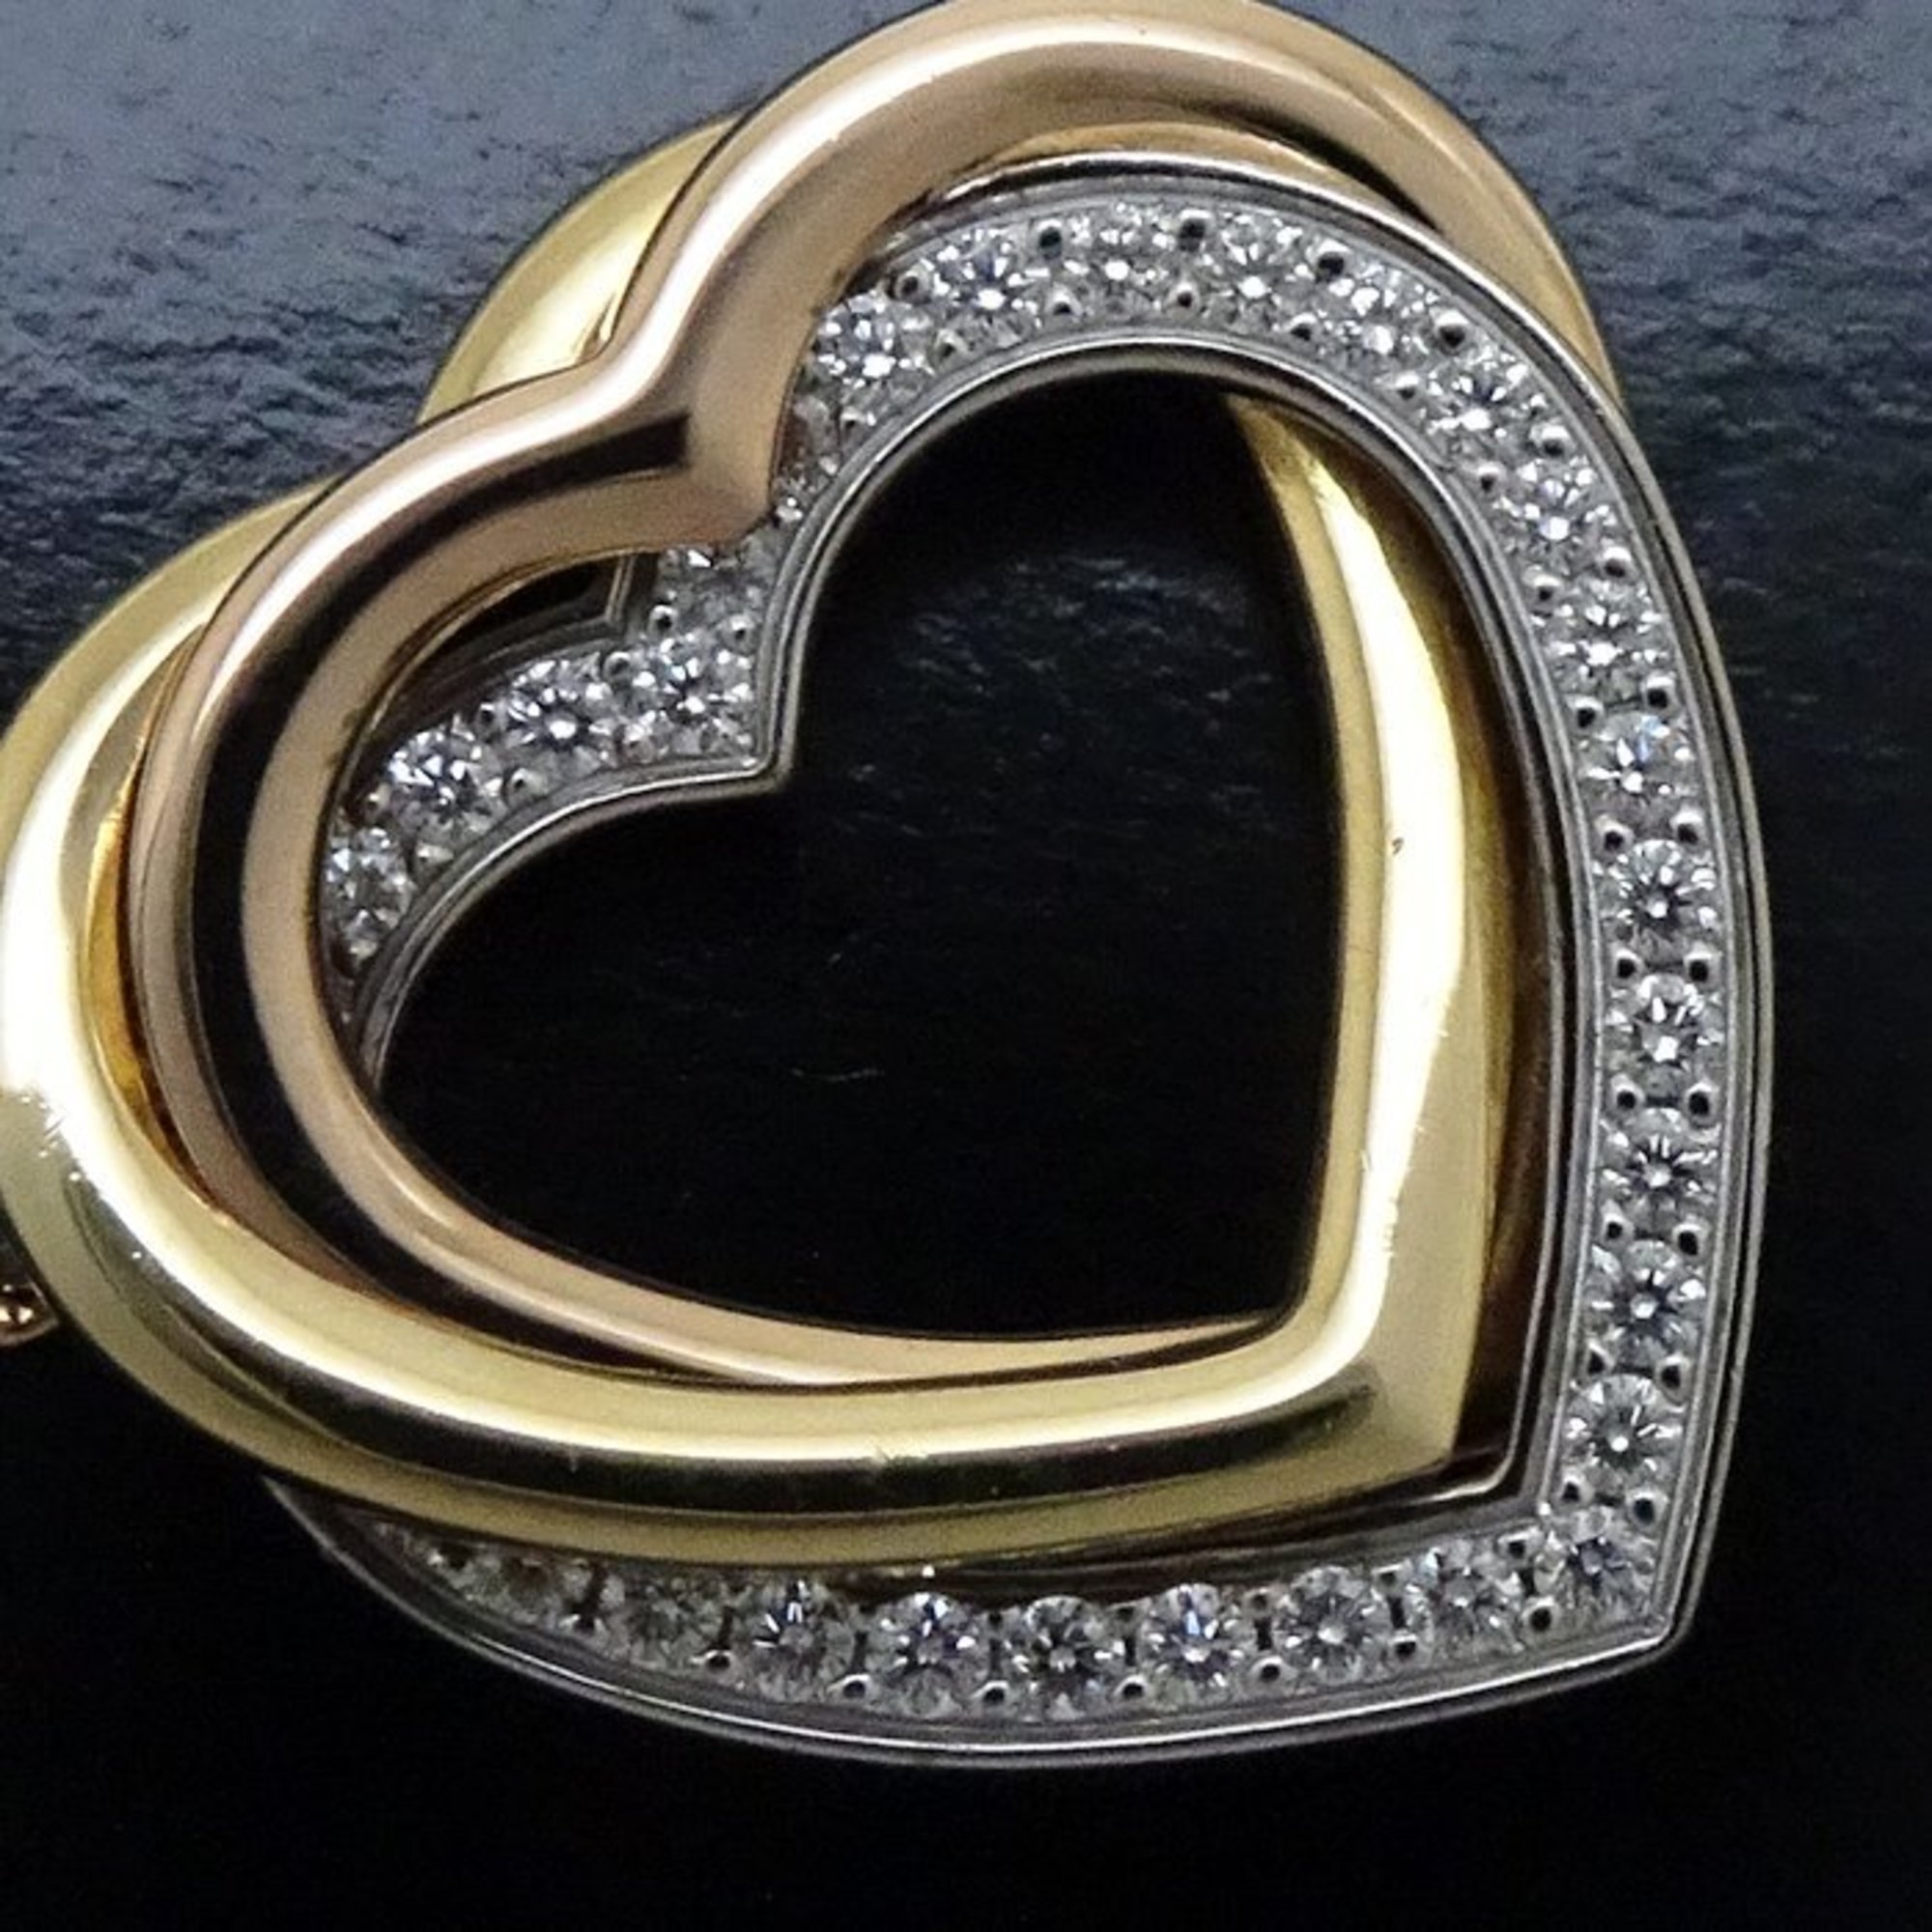 CARTIER Trinity Heart Necklace Diamond B7061200 K18 Three-Color Gold 291637